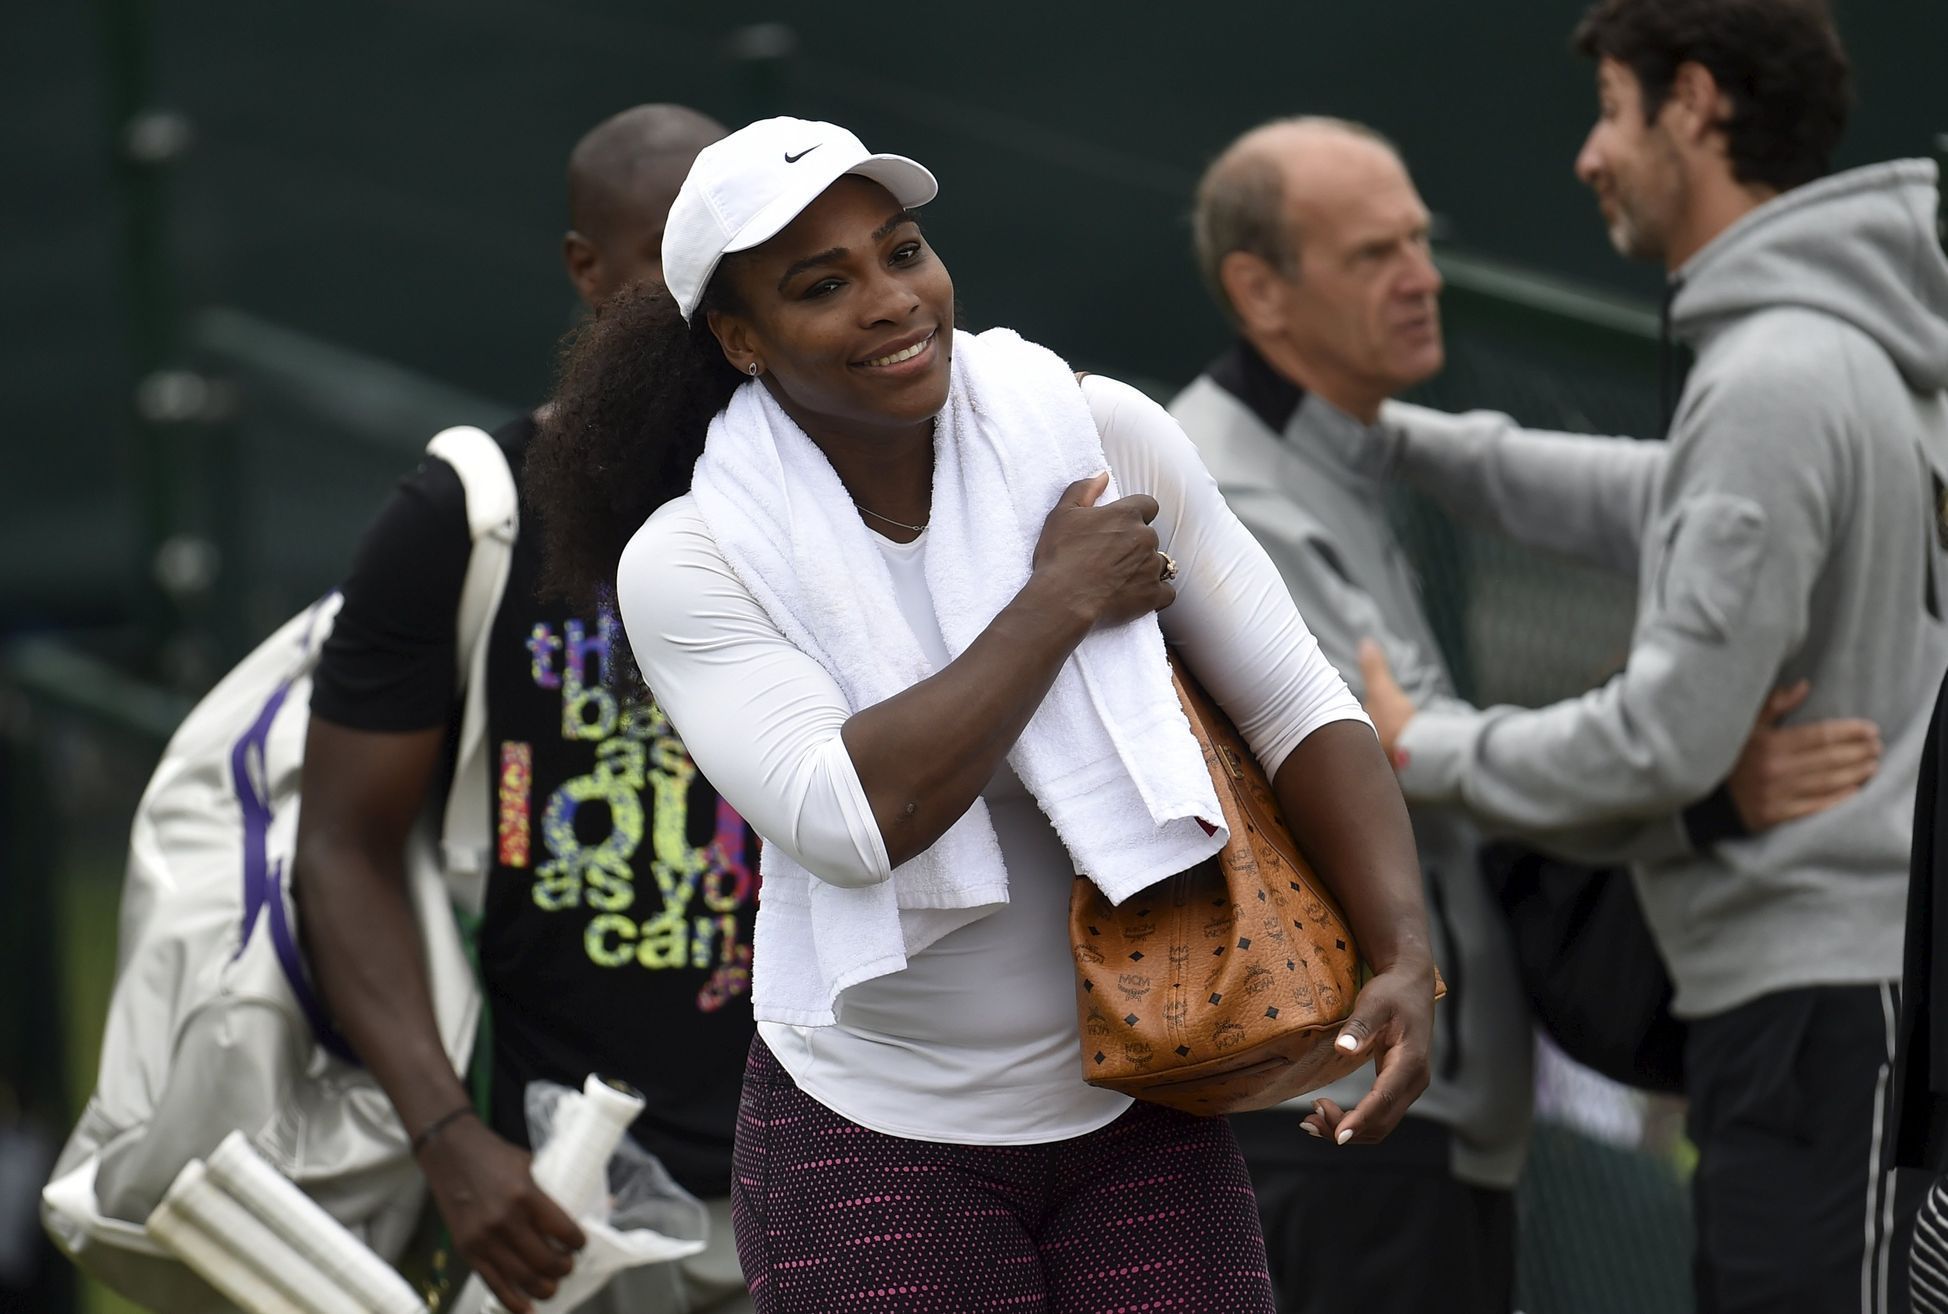 Příprava na Wimbledon 2015: Serena Williamsová